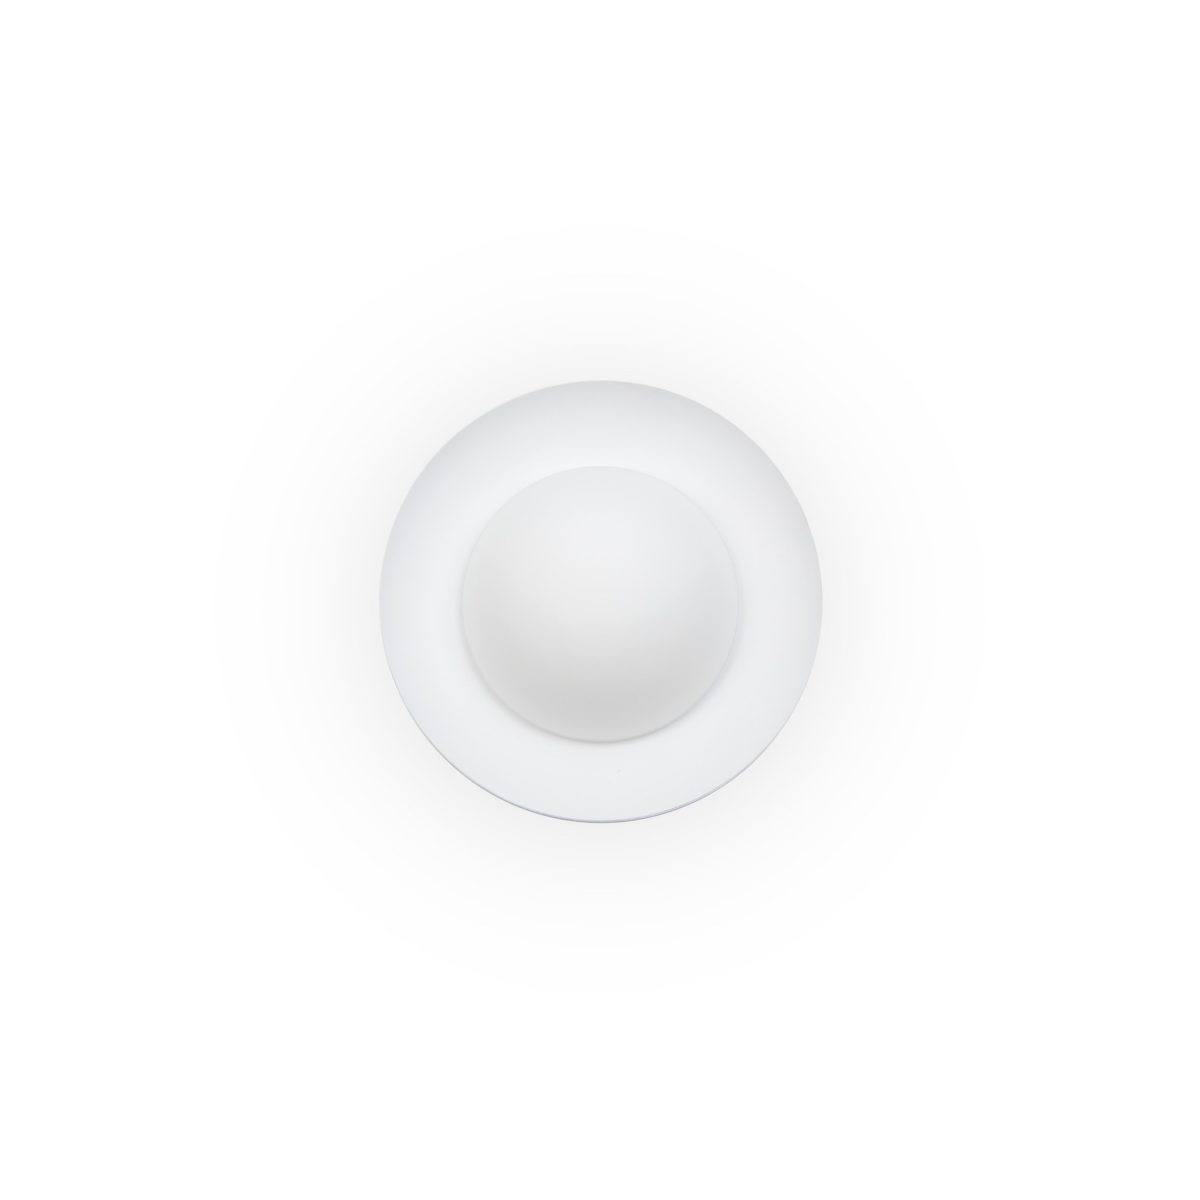 SIDE LED Aplique de Faro. Medidas: Ø 200 x L 200 x A 90 x F 200 mm. Color: Blanco